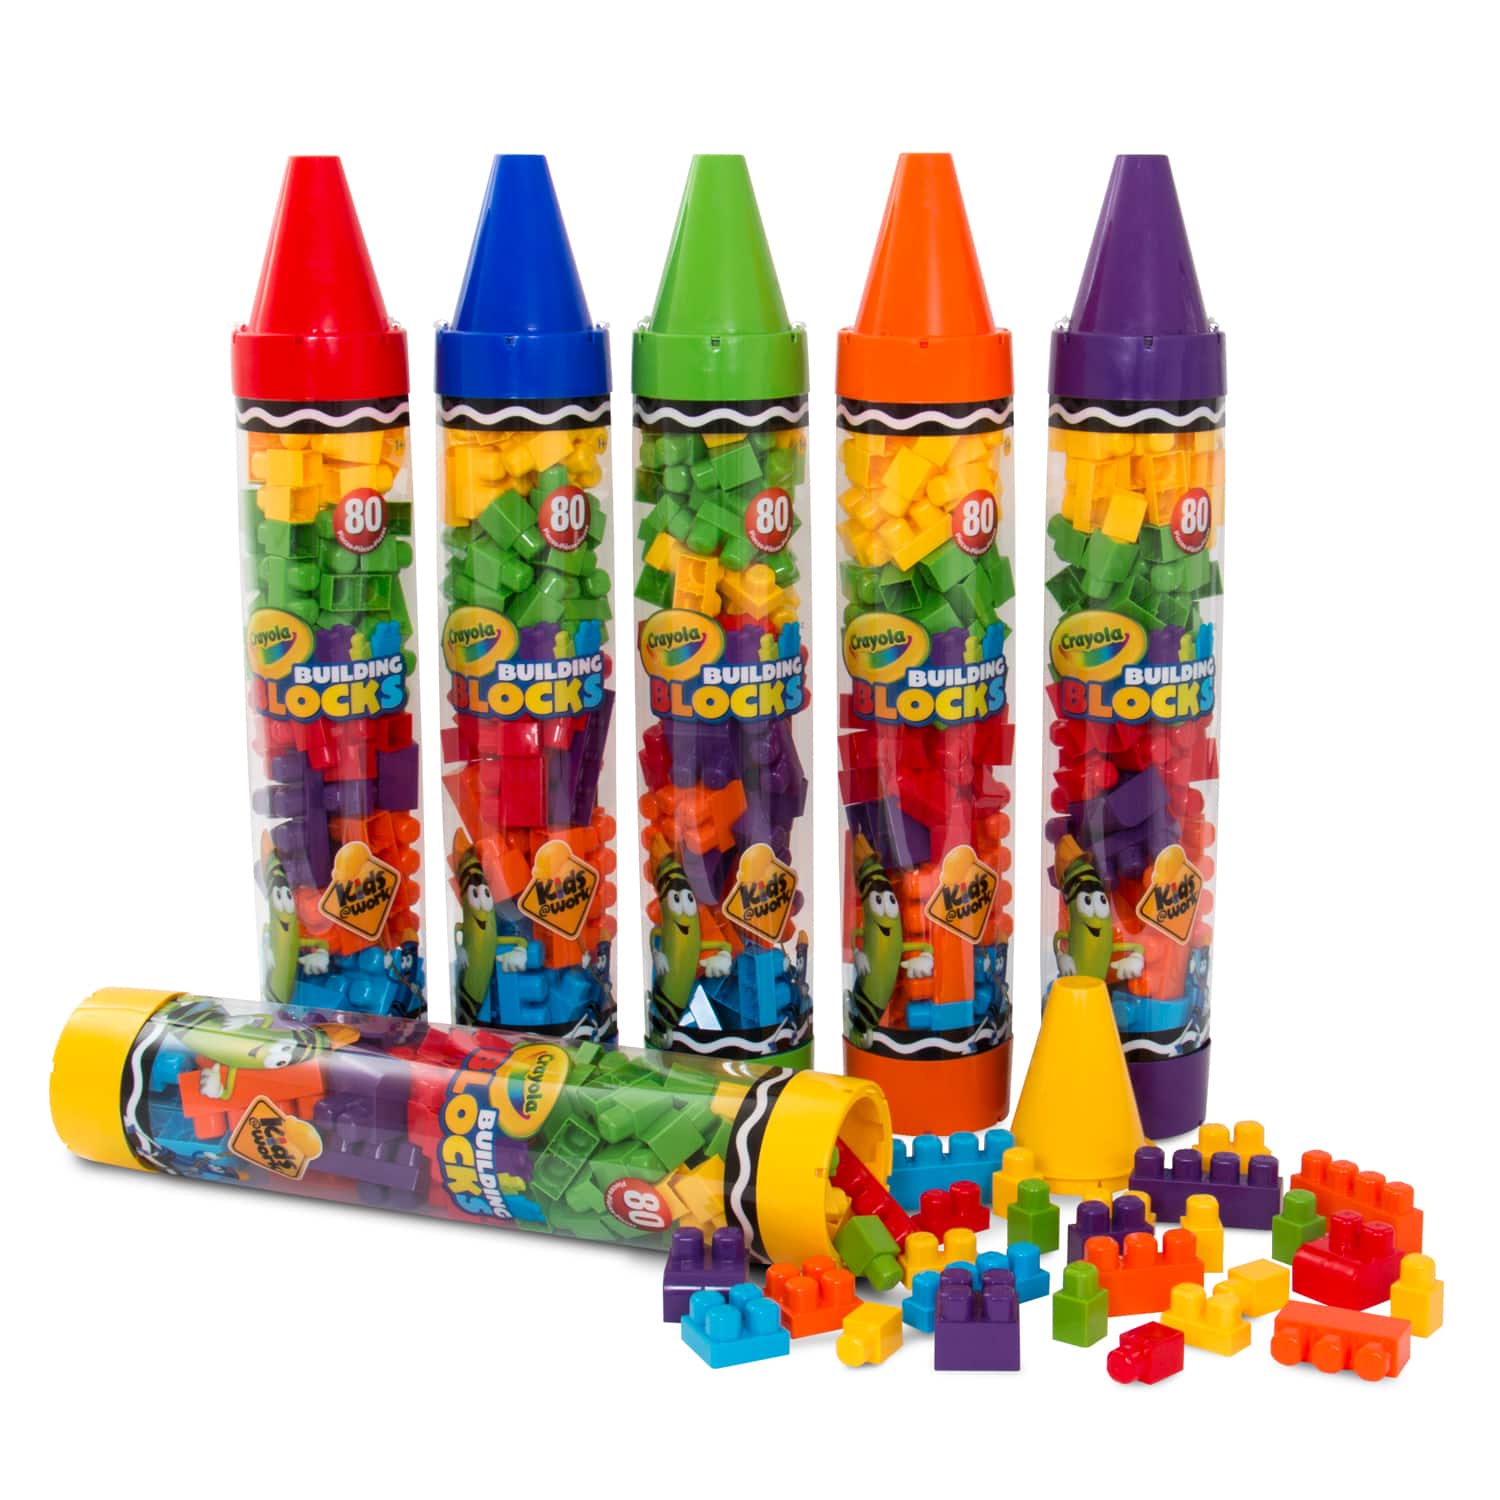 Crayons & Decal-Sheets Wagon Kids Arts & Craft Toy NEW Crayola Building Blocks 